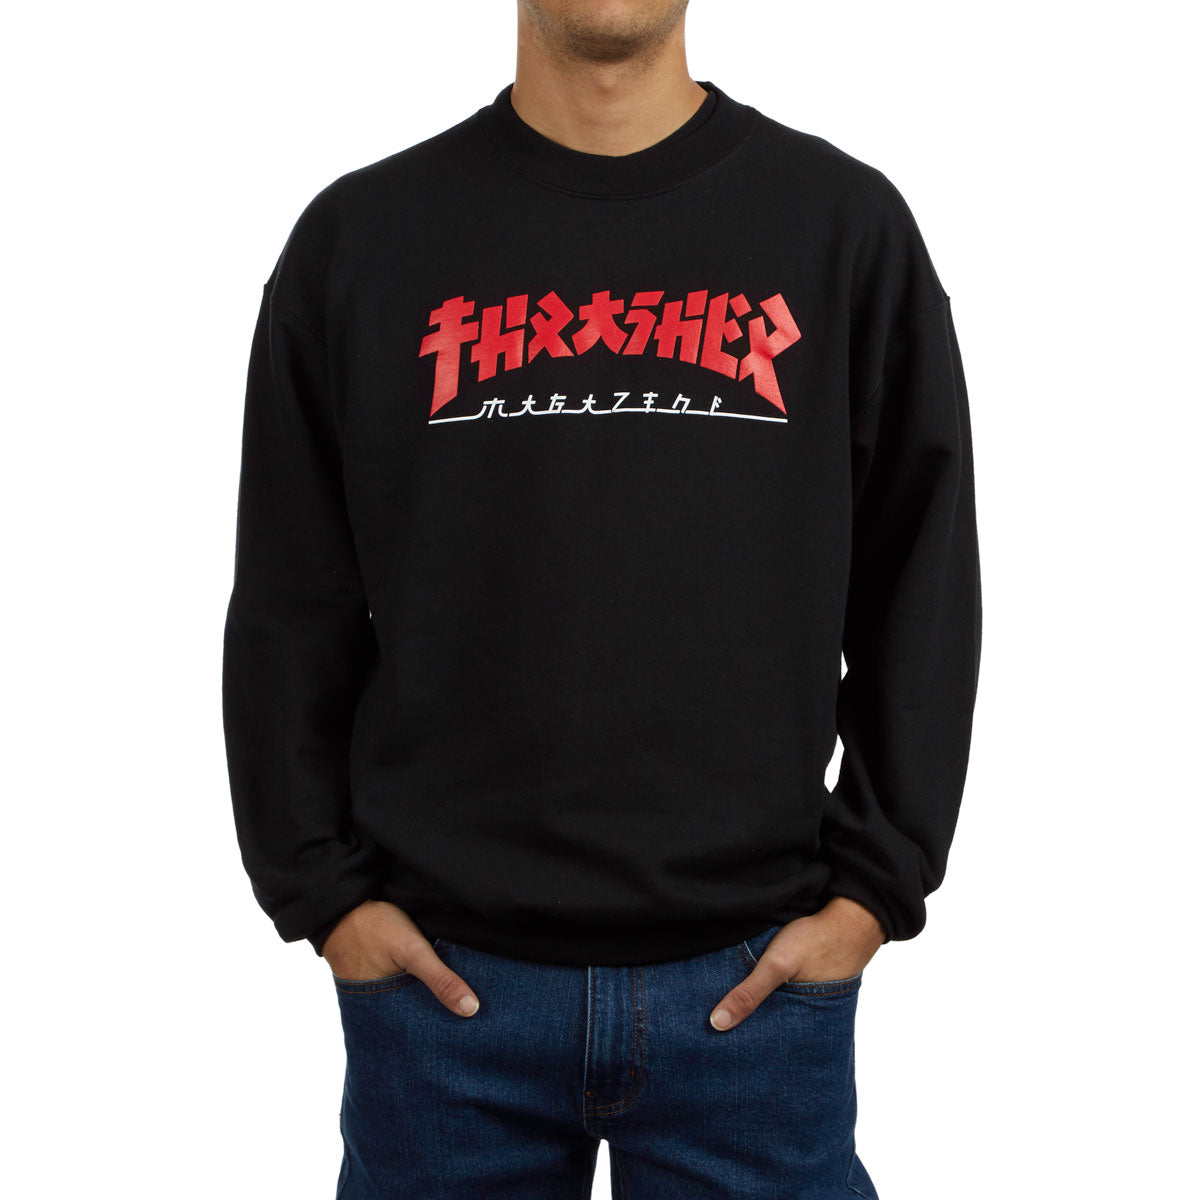 Thrasher Godzilla Crewneck Sweatshirt - Black image 1